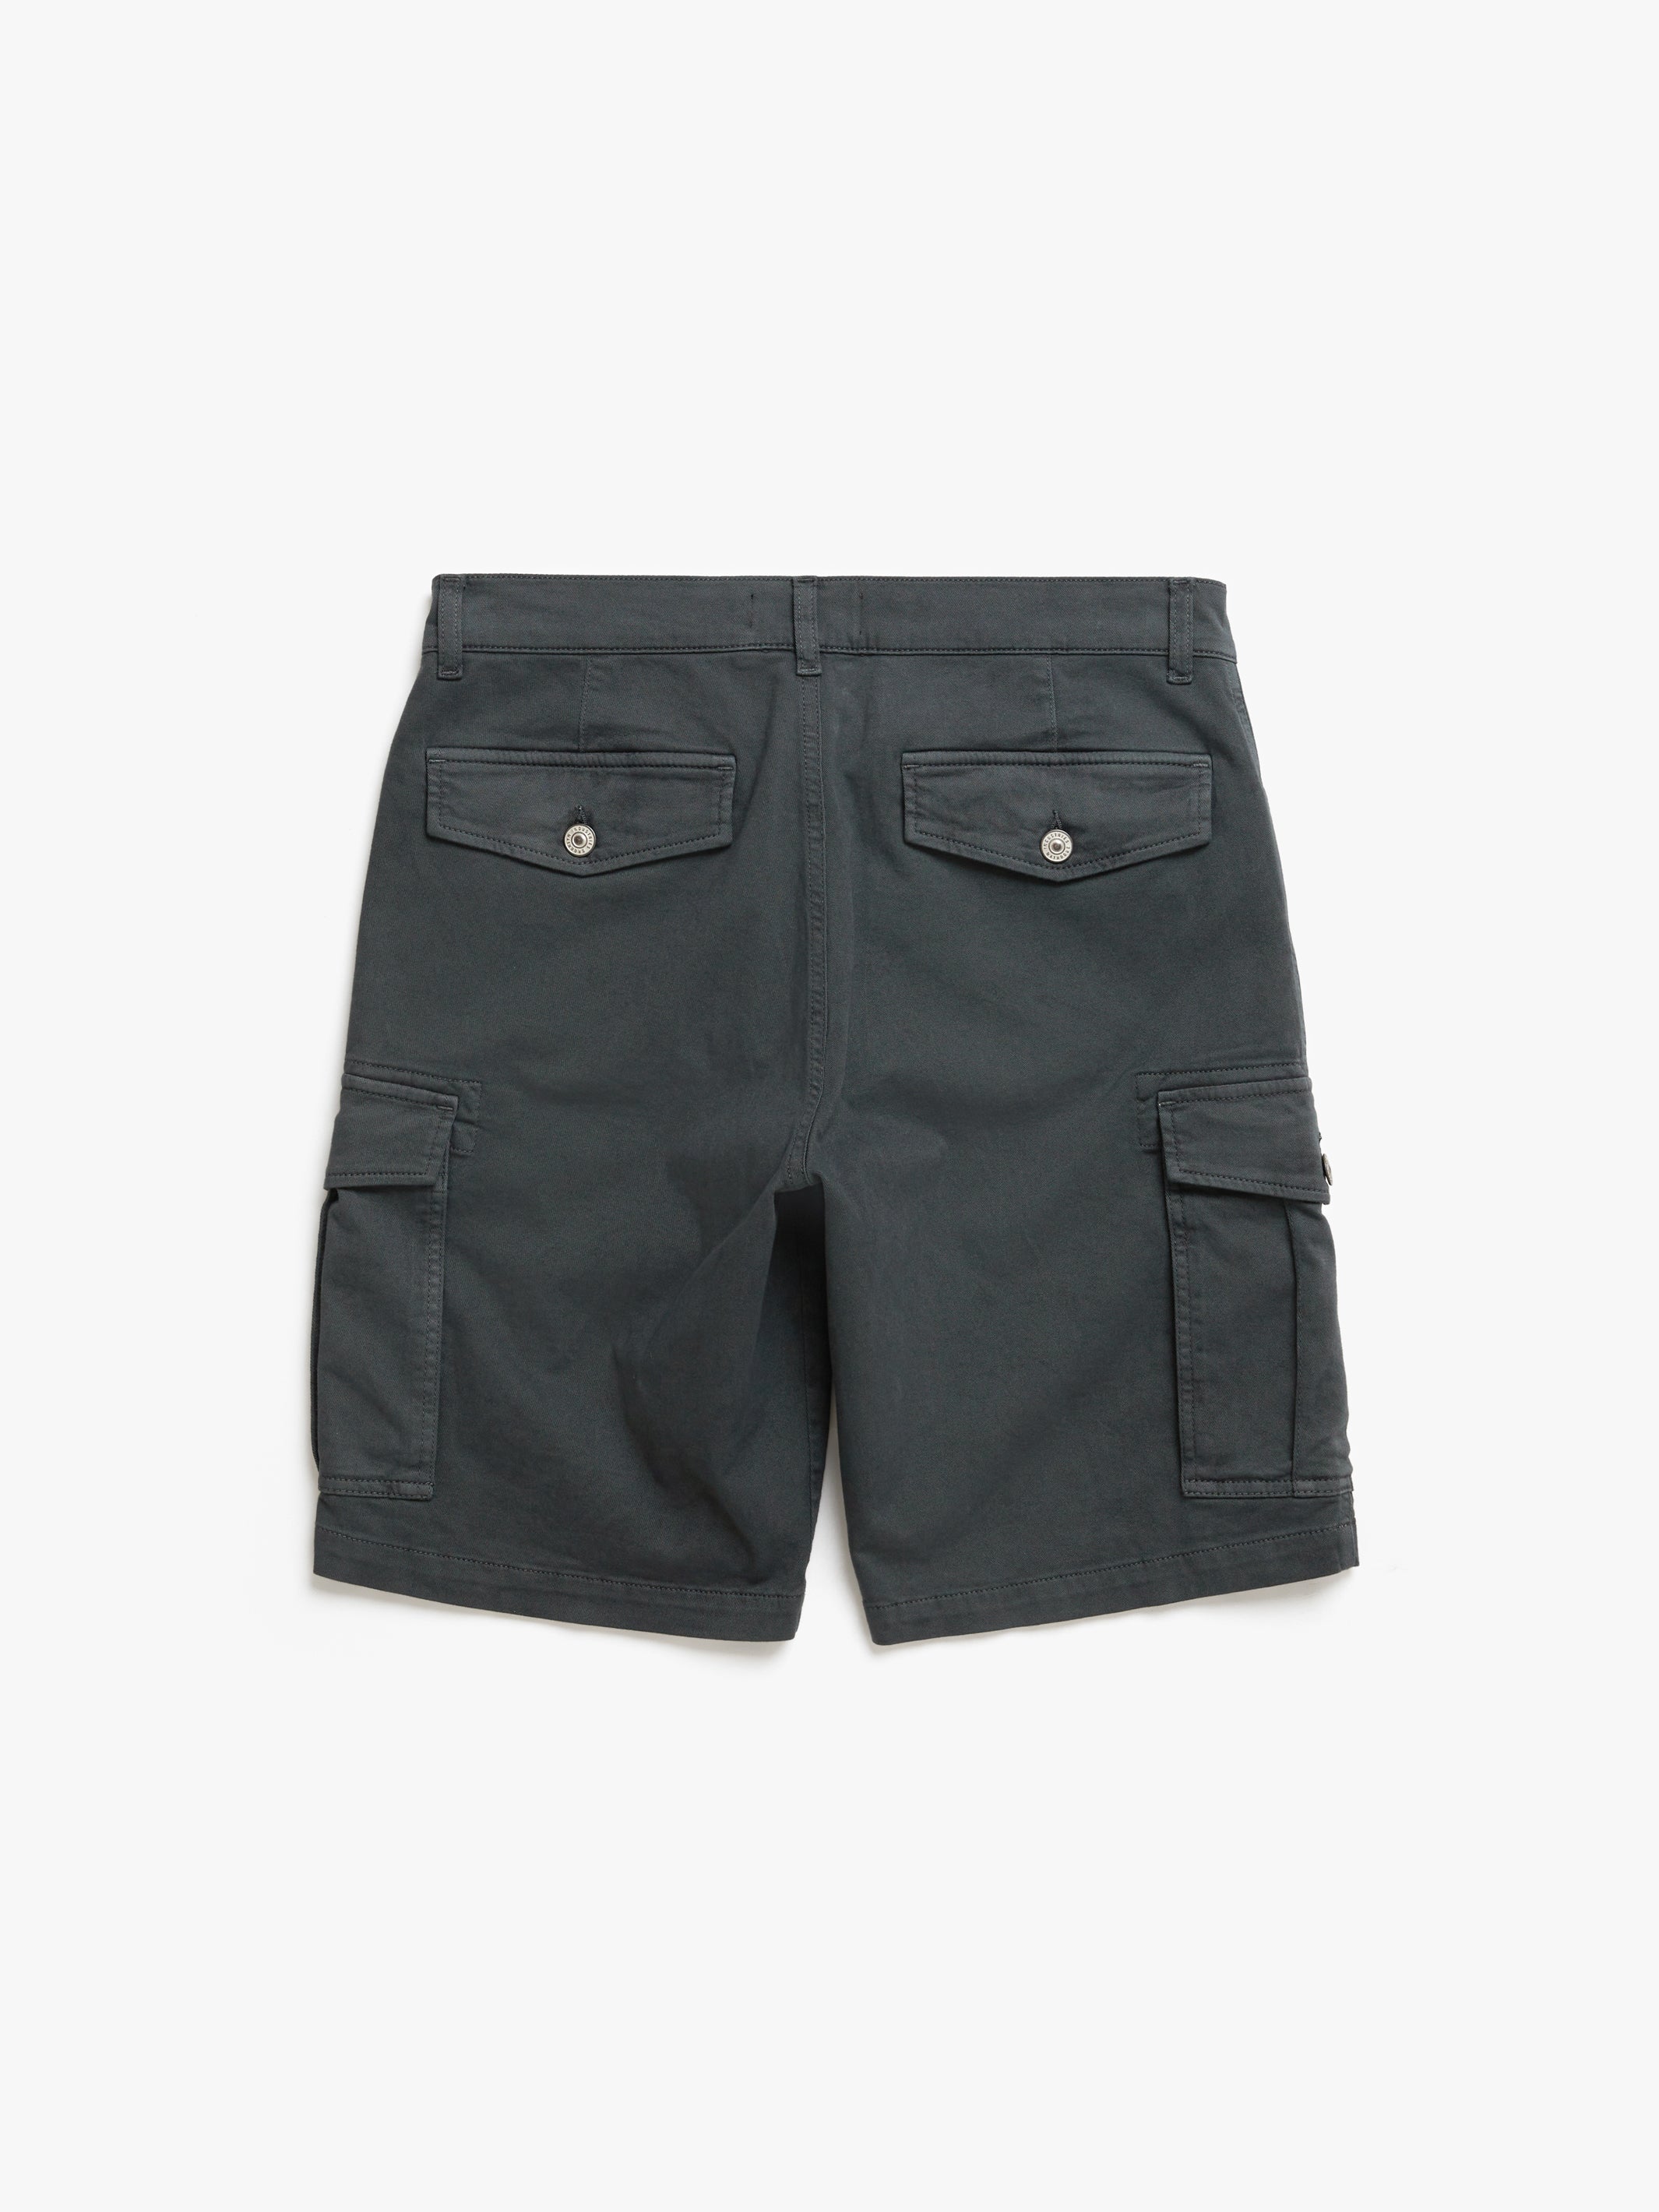 Men's Cargo Shorts in Asphalt - BROOKLYN INDUSTRIES